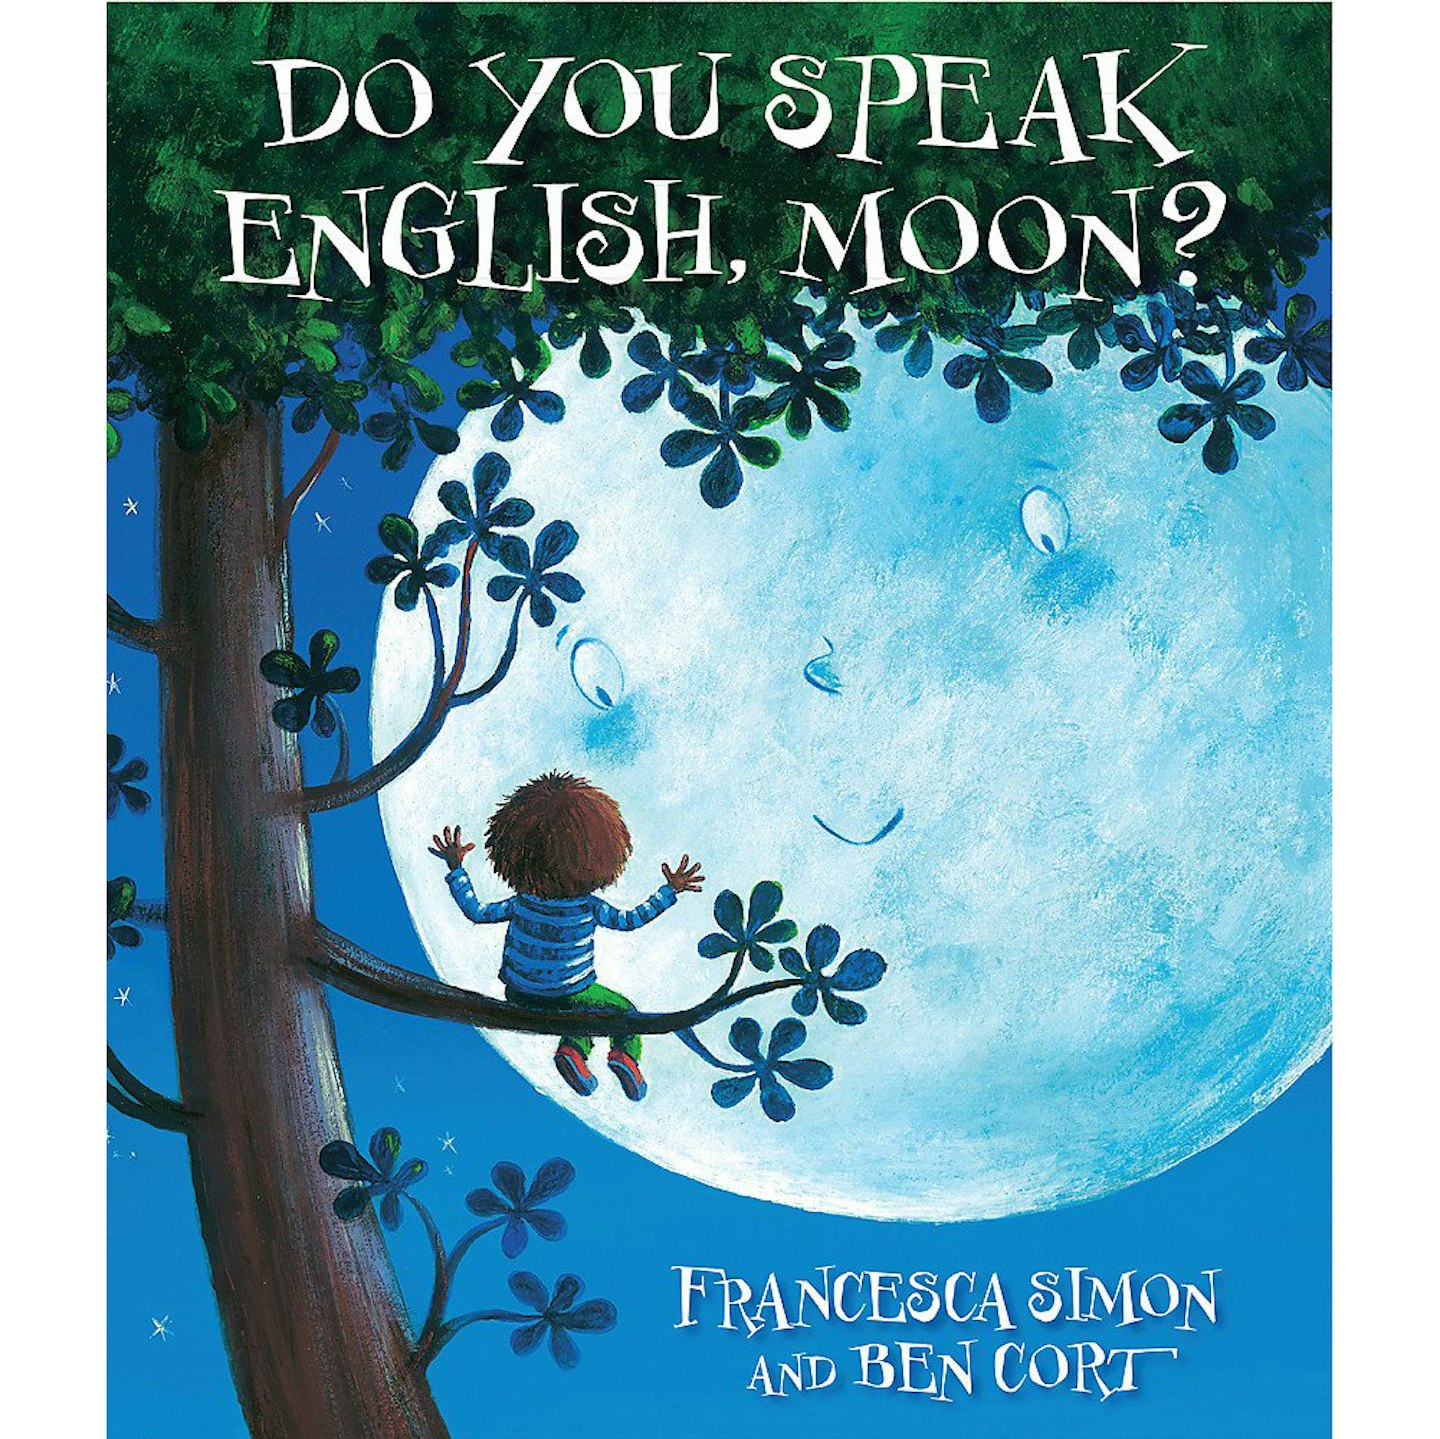 Do You Speak English, Moon? by Francesca Simon and Ben Cort